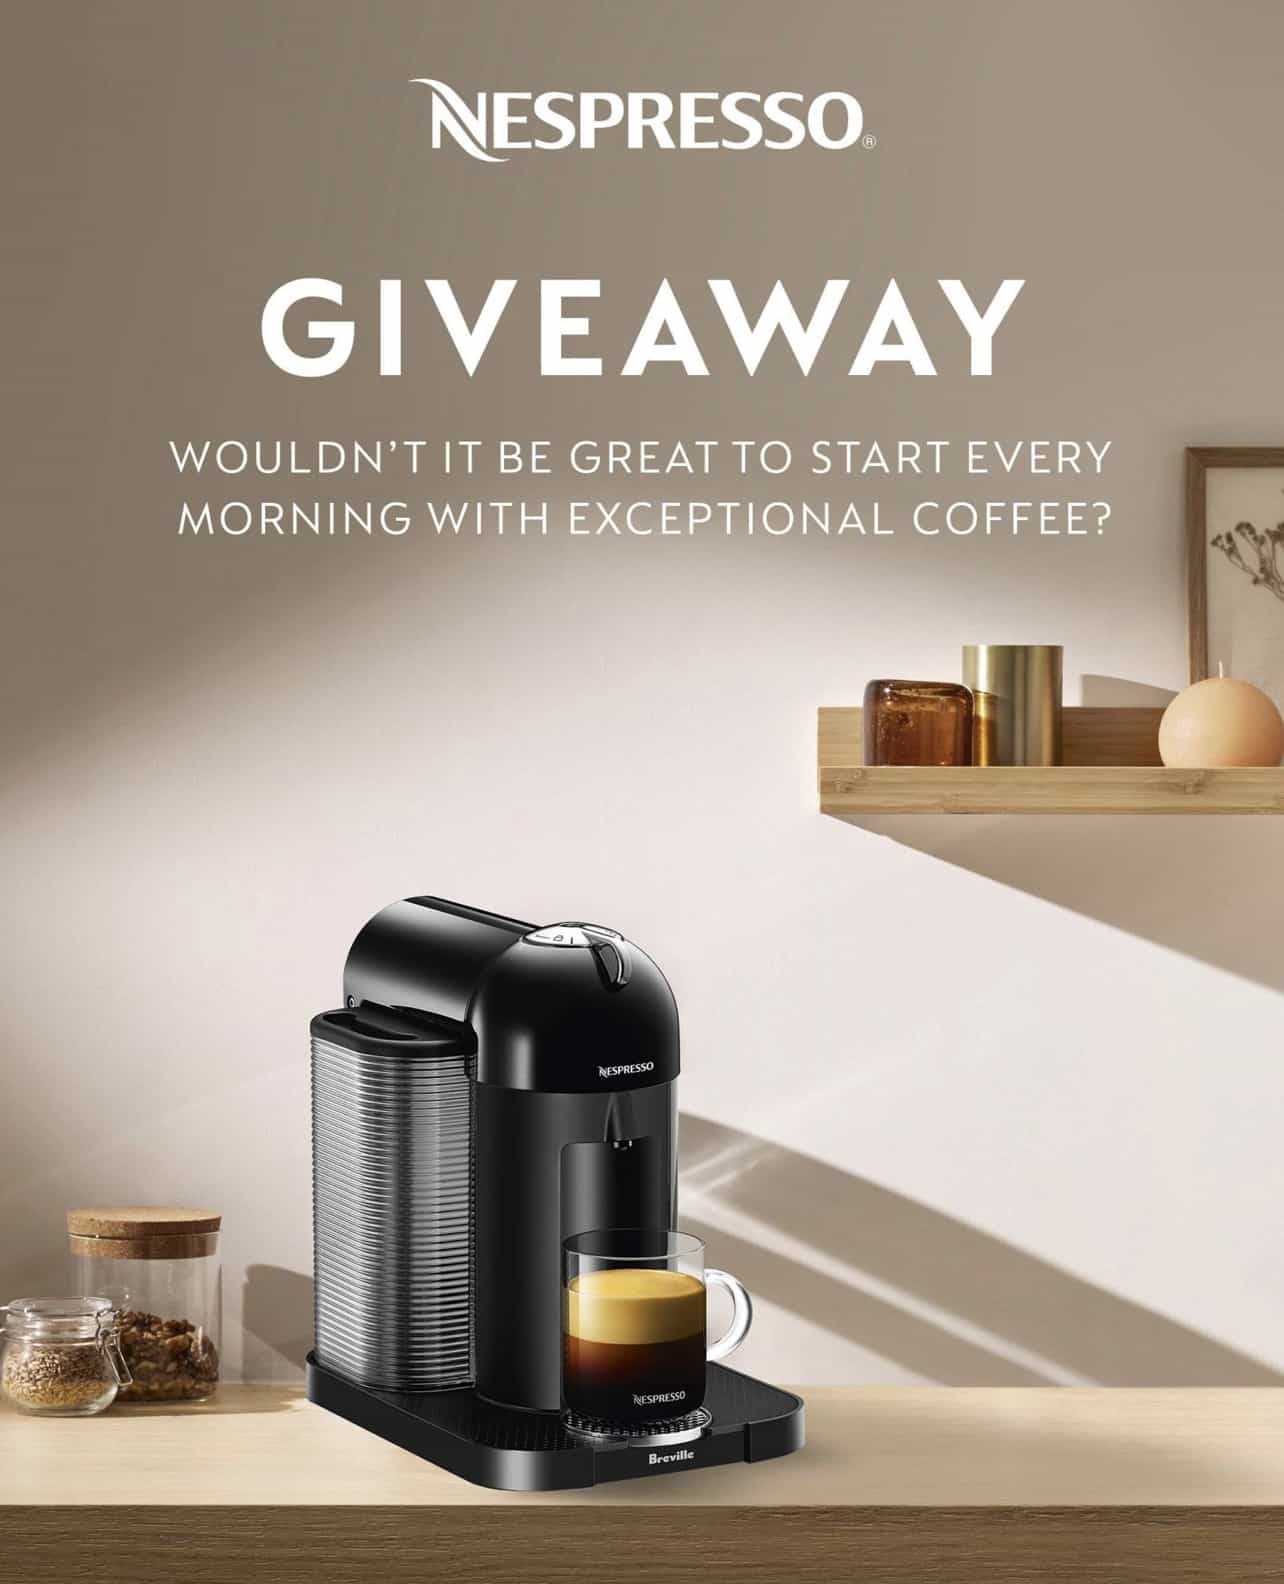 Win a Nespresso Coffee Machine